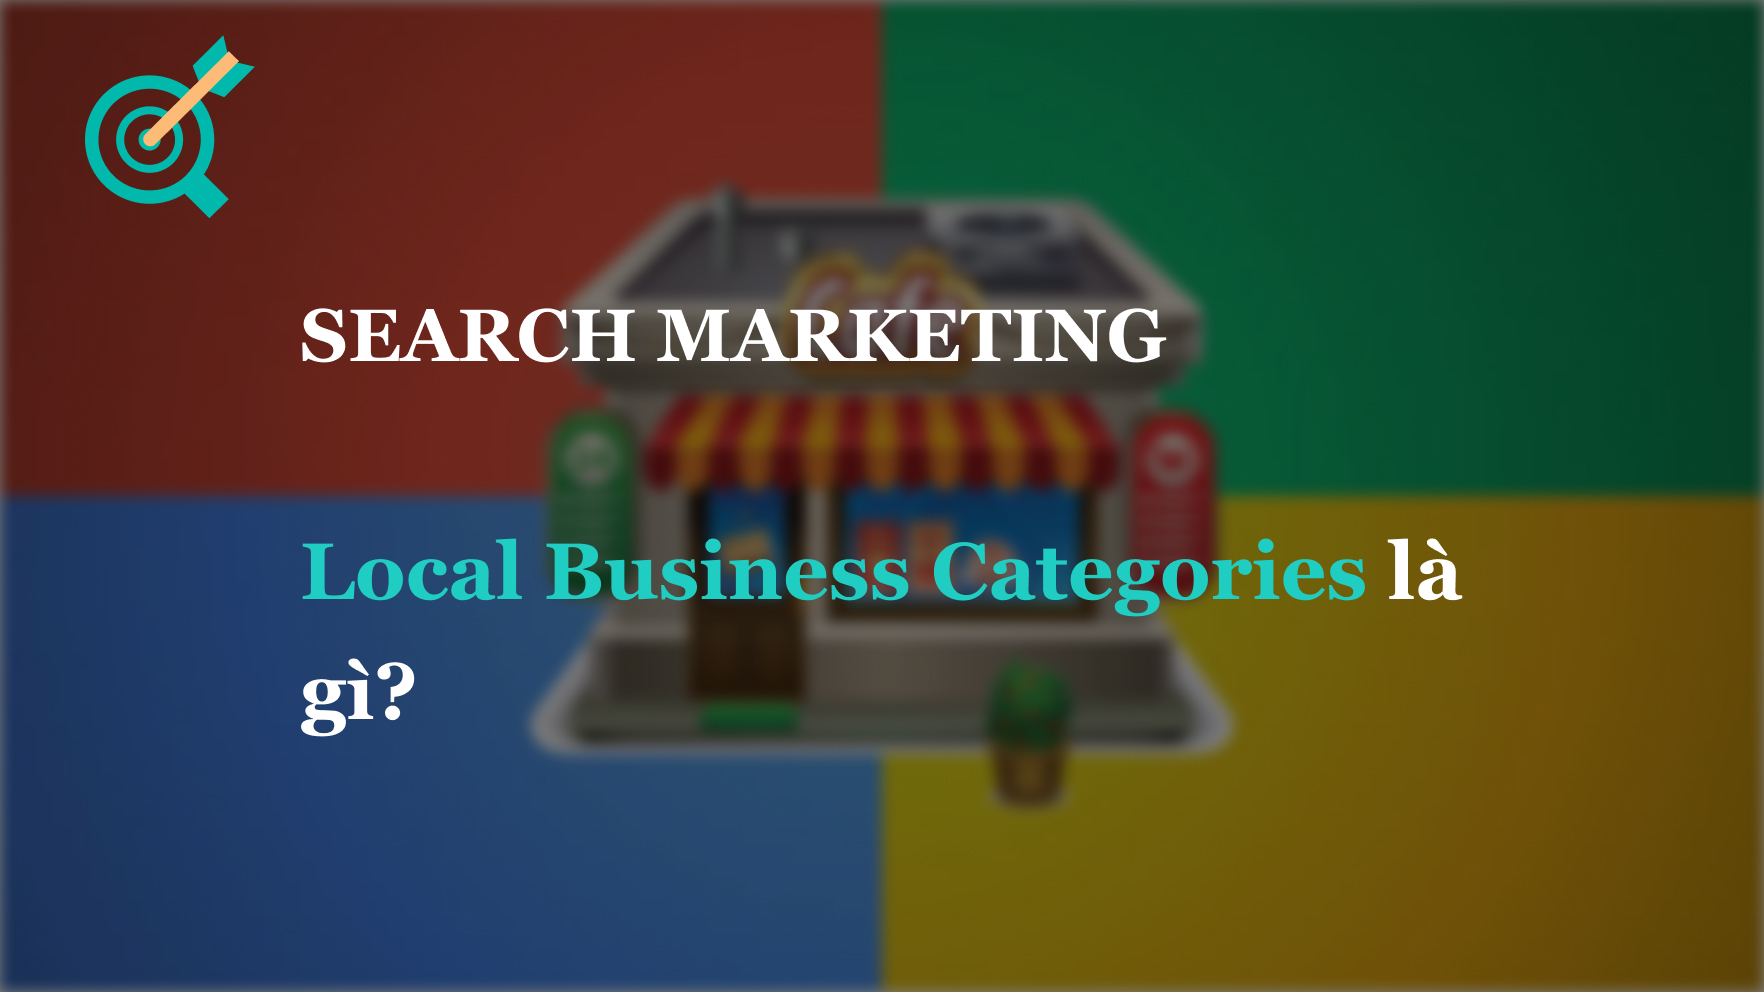 Local Business Categories là gì?